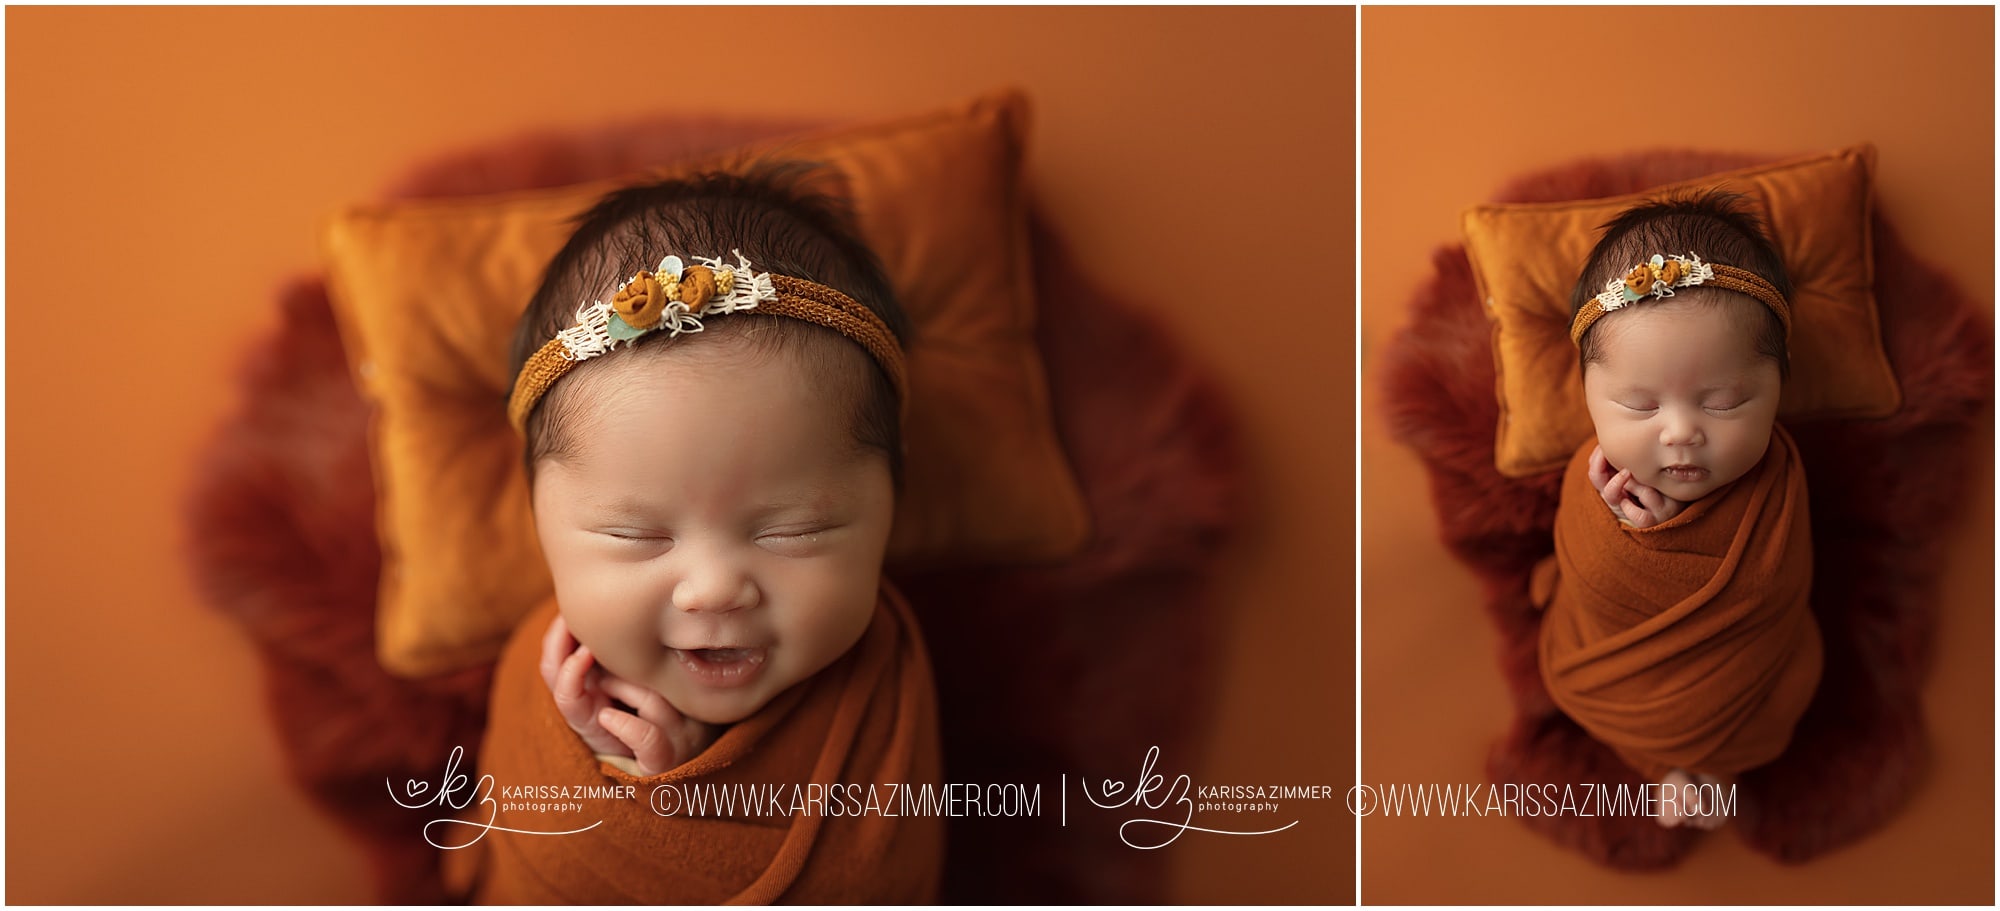 Baby girl smiling in newborn portraits